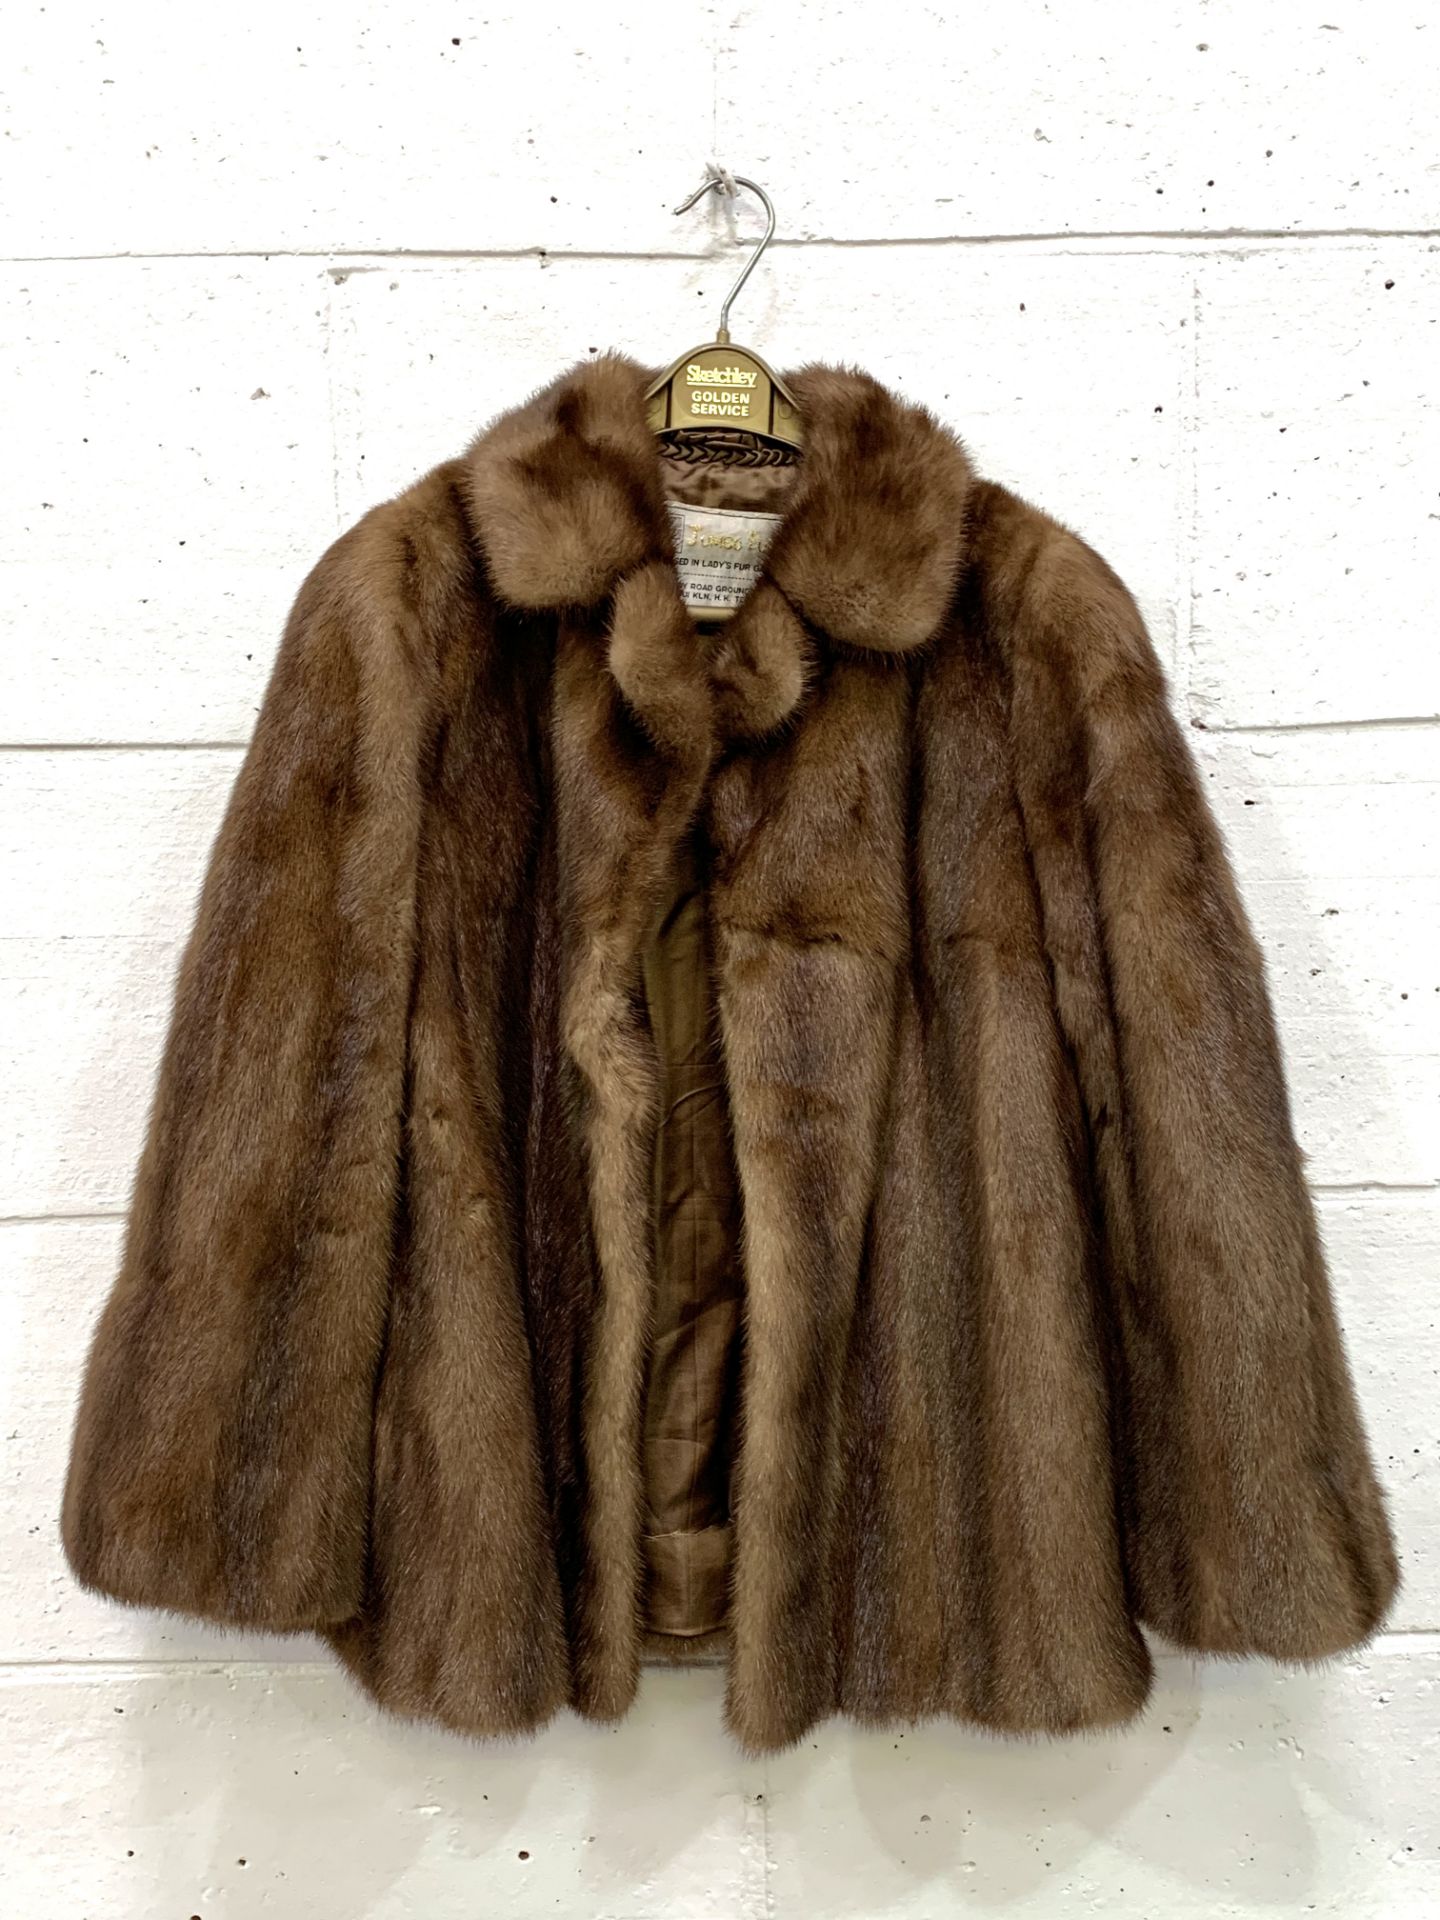 Lady's fur jacket by the Jumbo Fur Company of Hong Kong